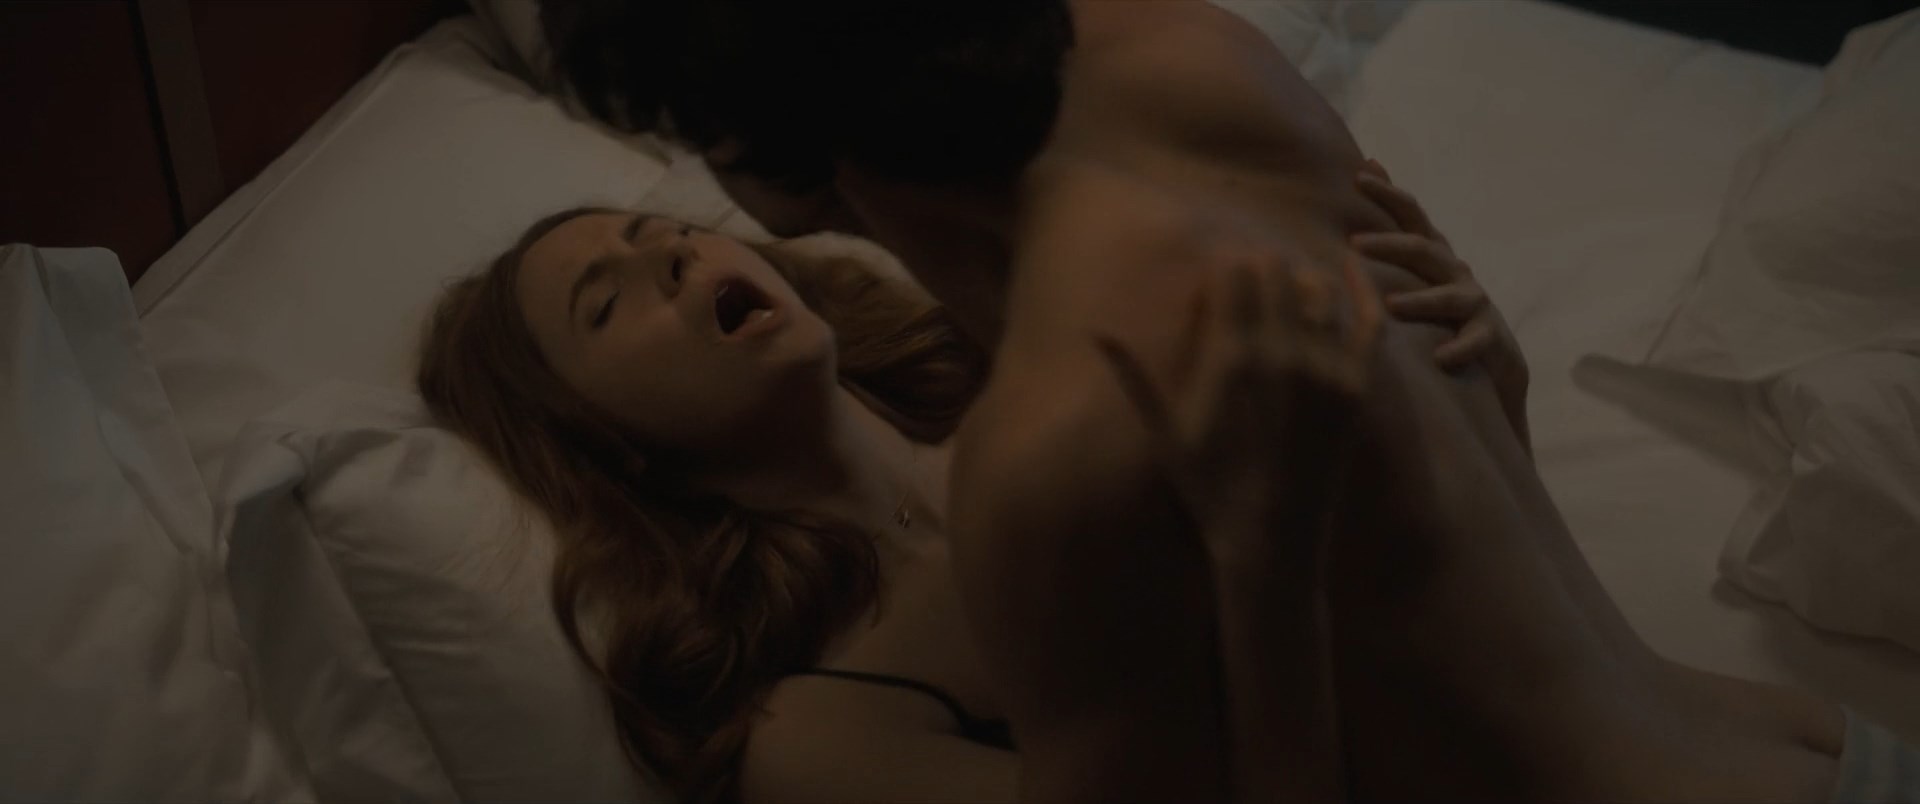 Ingrid Conte Hot Sex Scene Download - Watch Online - Ingrid Conte, Fabiane Oliveira, Julia Bosco - Ibiti o que  (2015) HD 720p